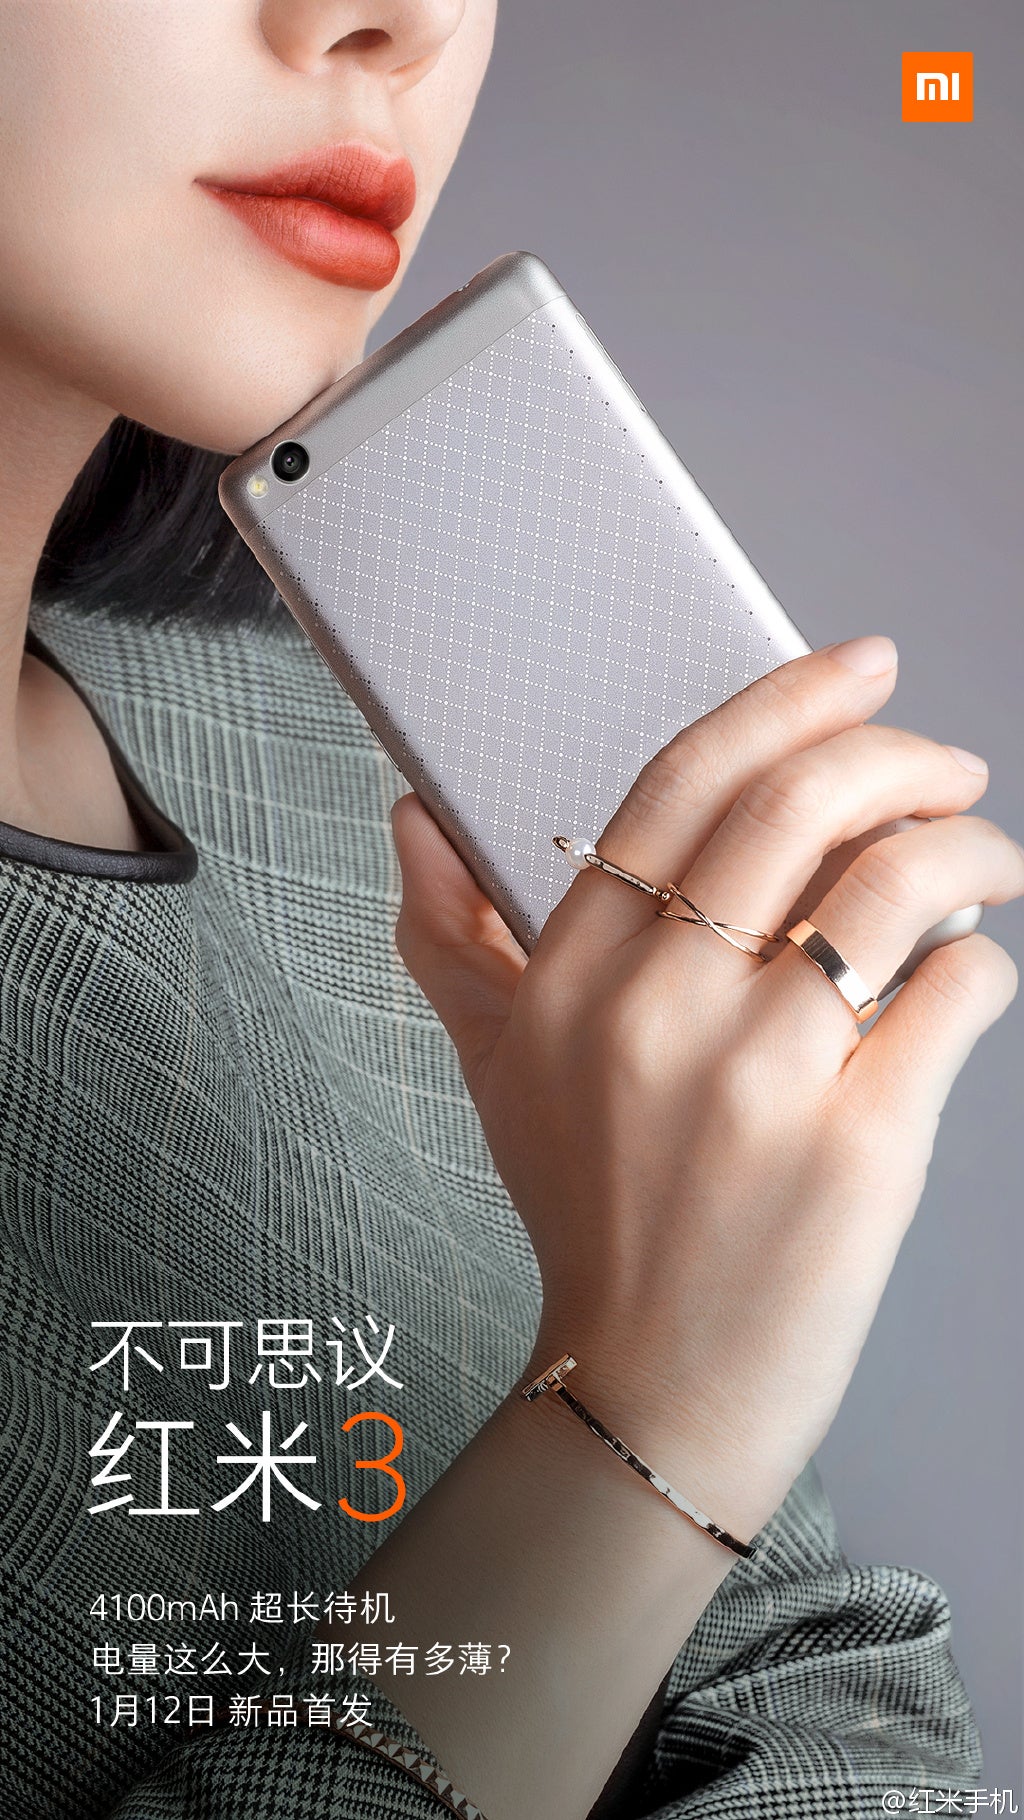 Xiaomi confirms unprecedented 4100 mAh battery for the 5" Redmi 3